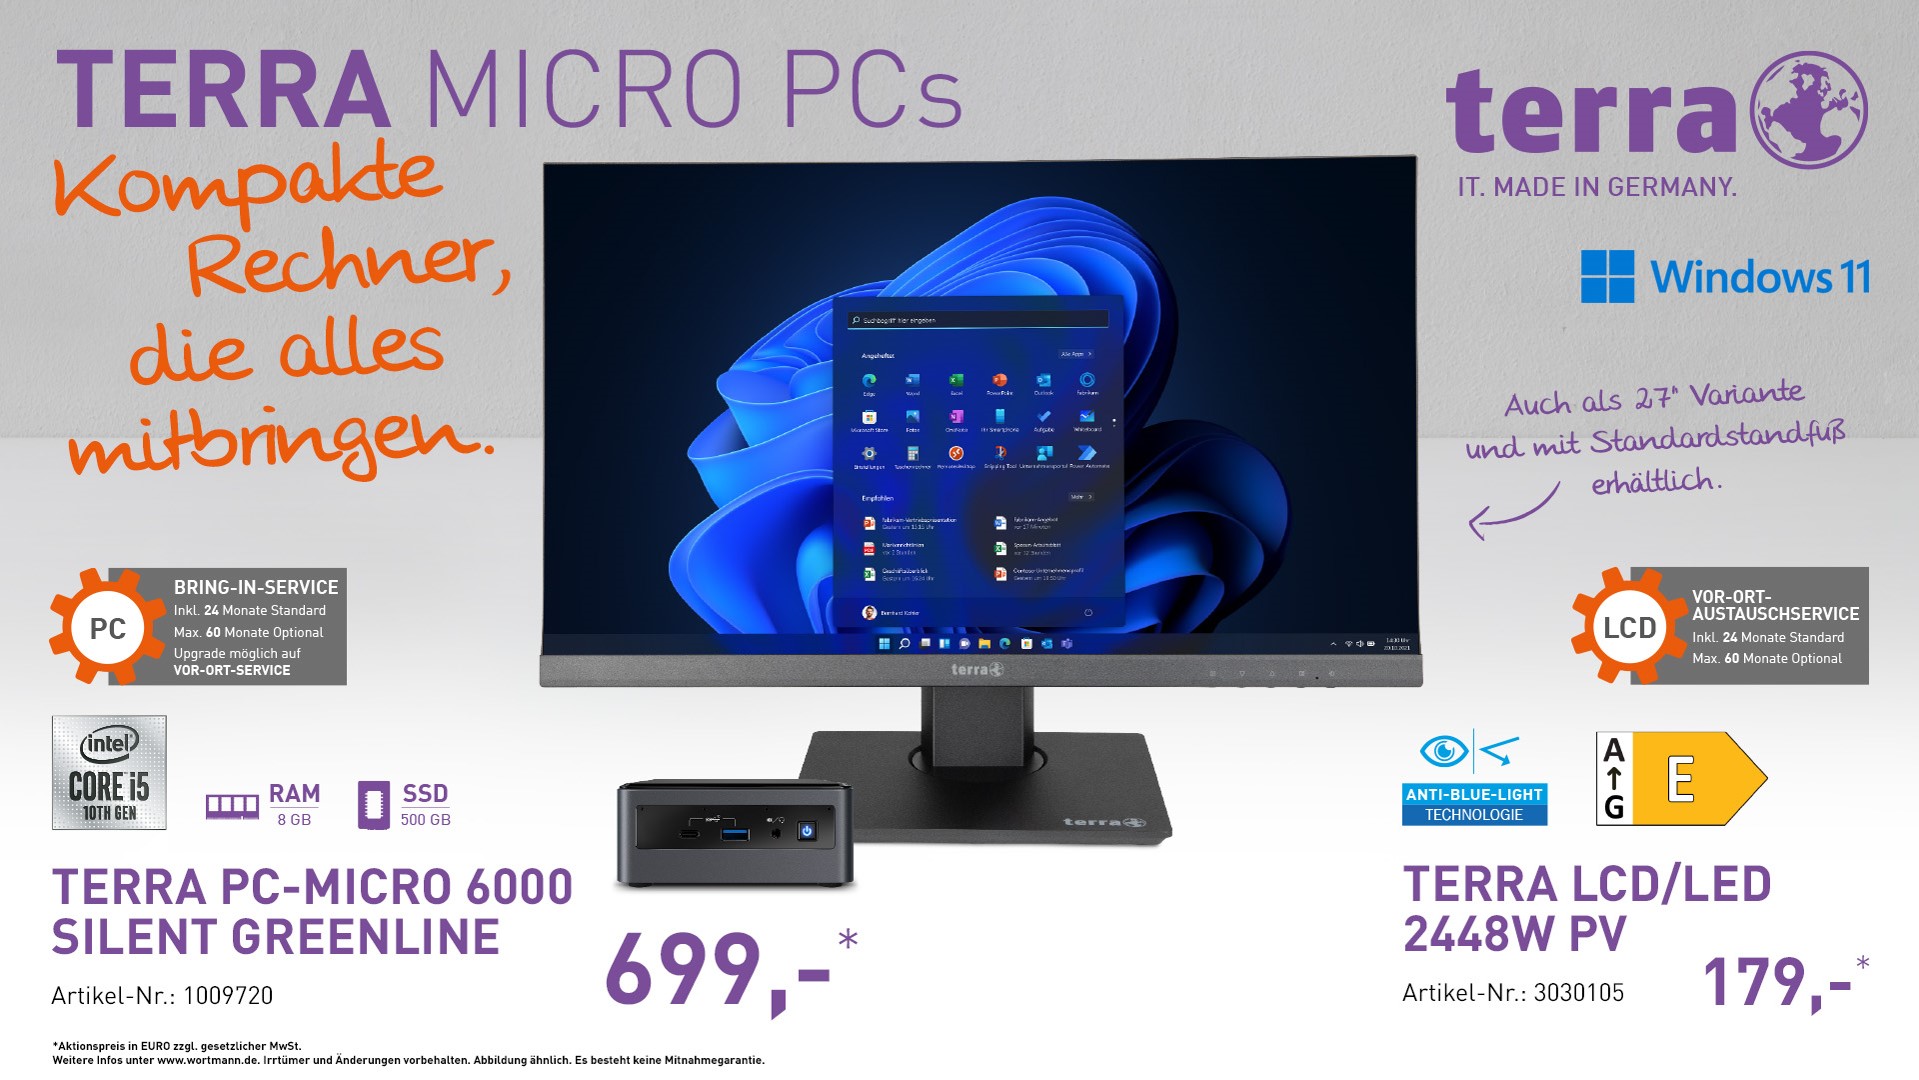 TERRA PC-MICRO 6000 SILENT